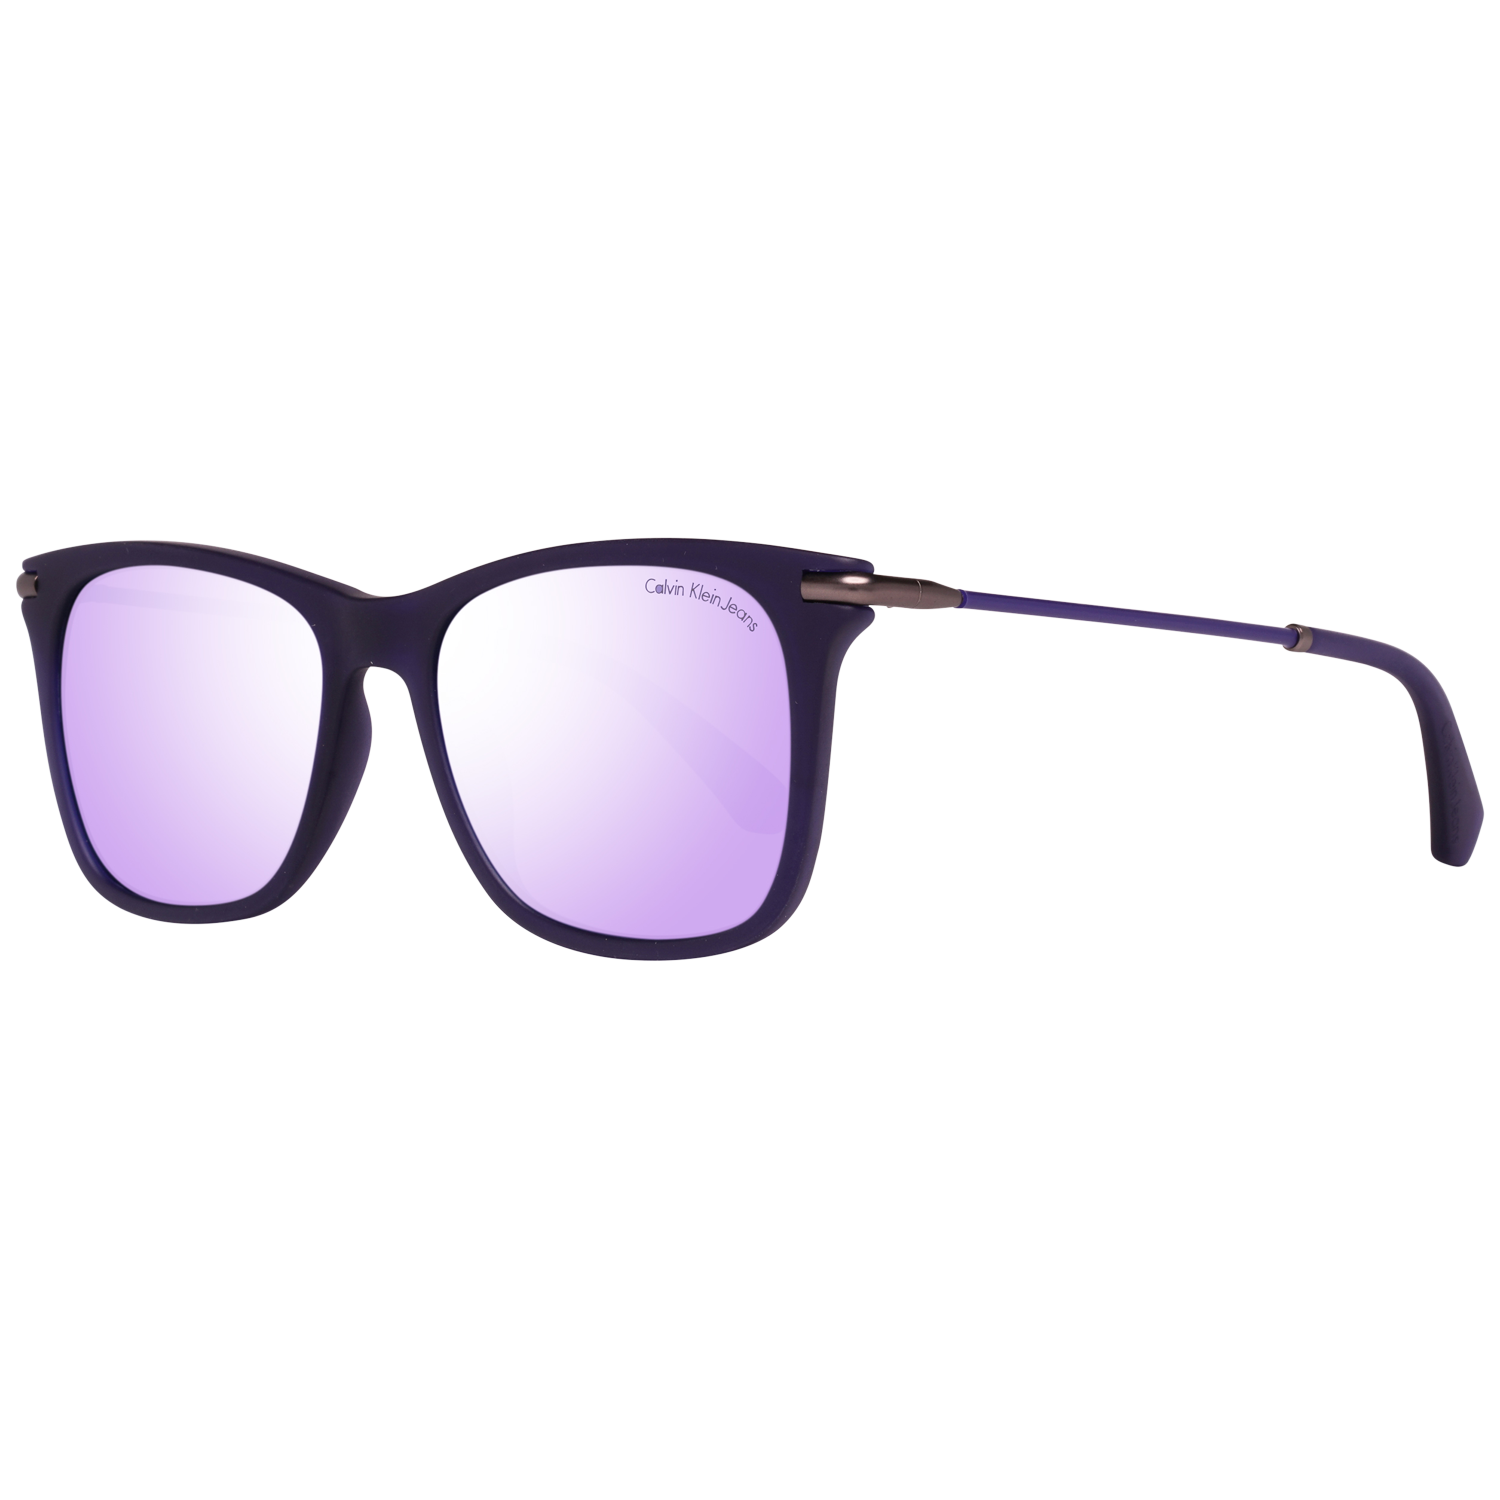 Calvin Klein Sunglasses CKJ512S 465 54